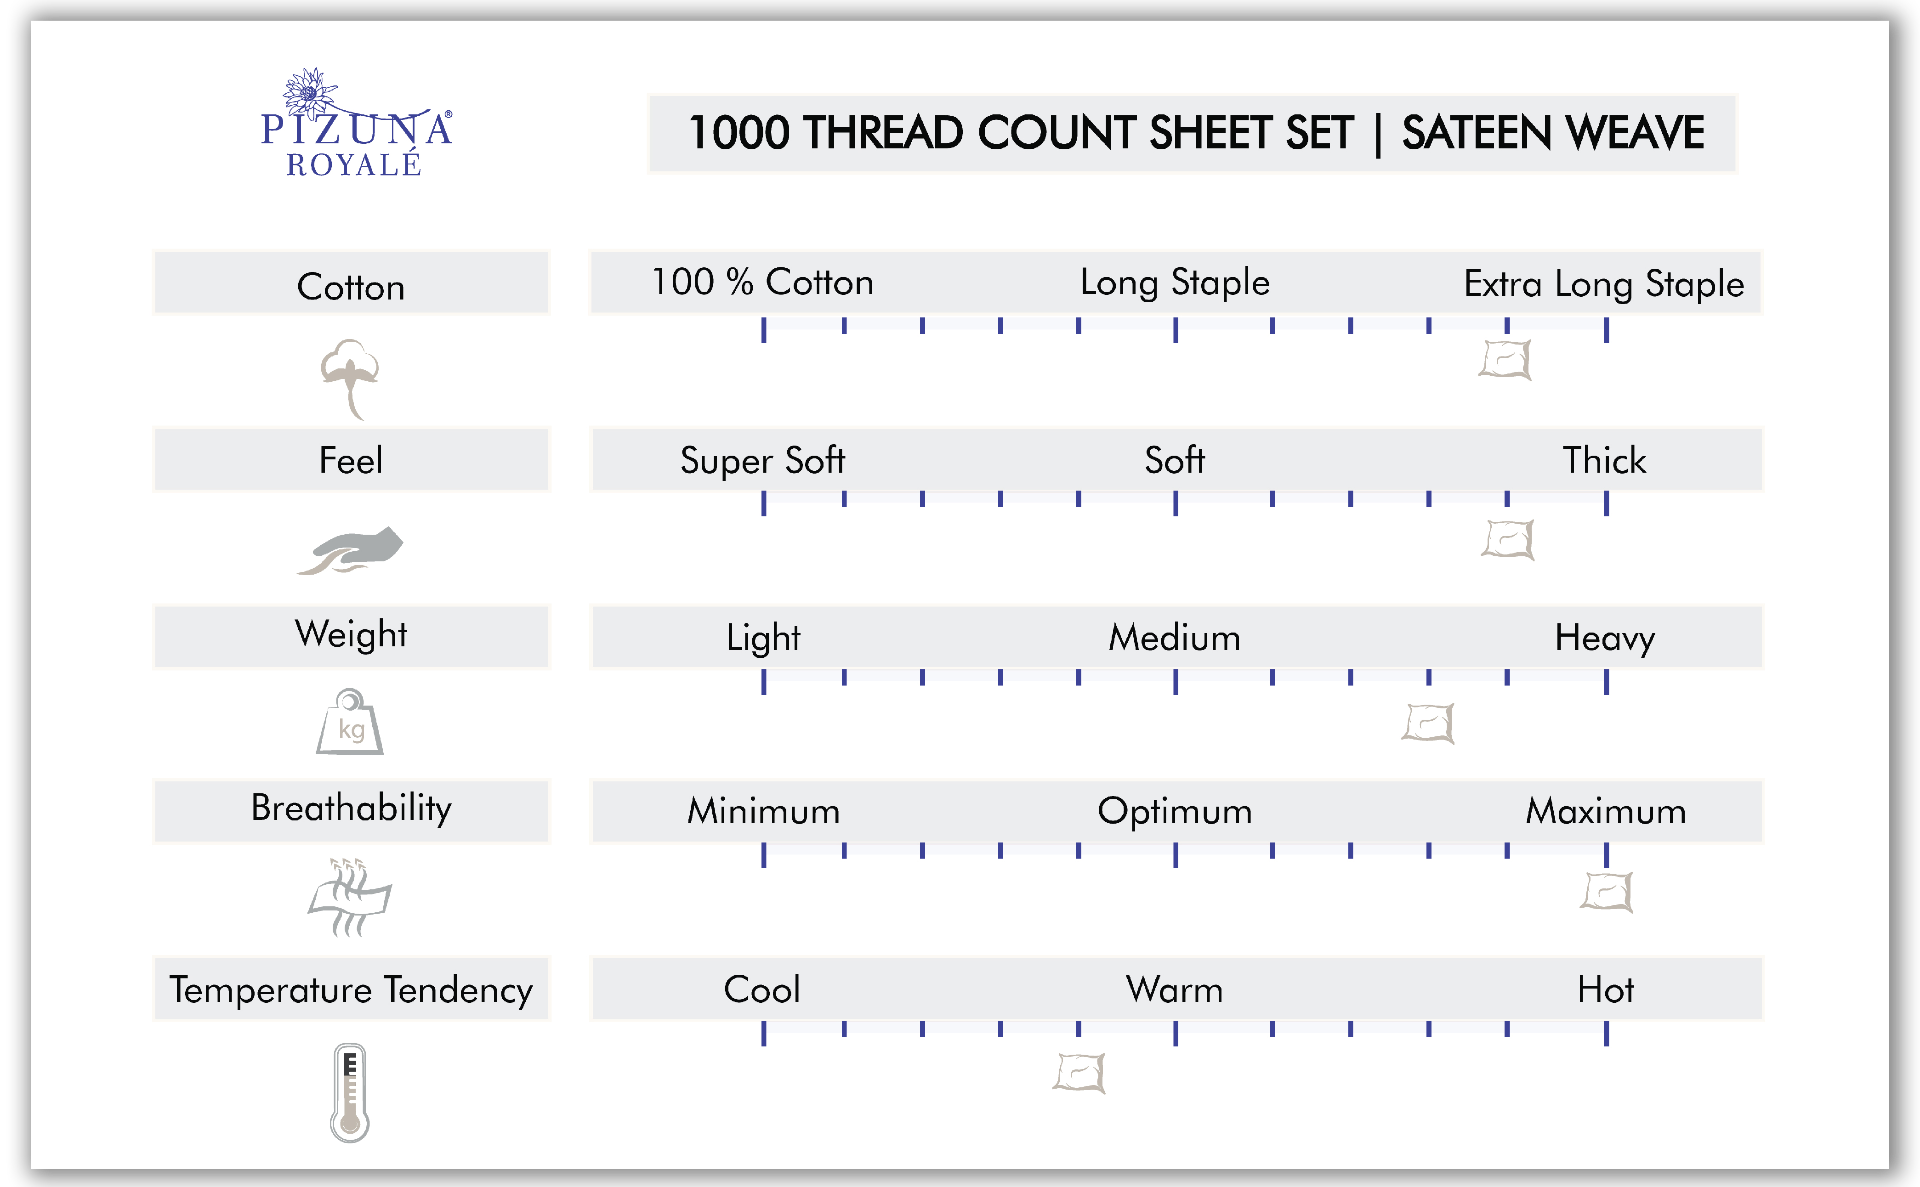 Pizuna Royale 1000 Thread Count Cotton Sheet Set